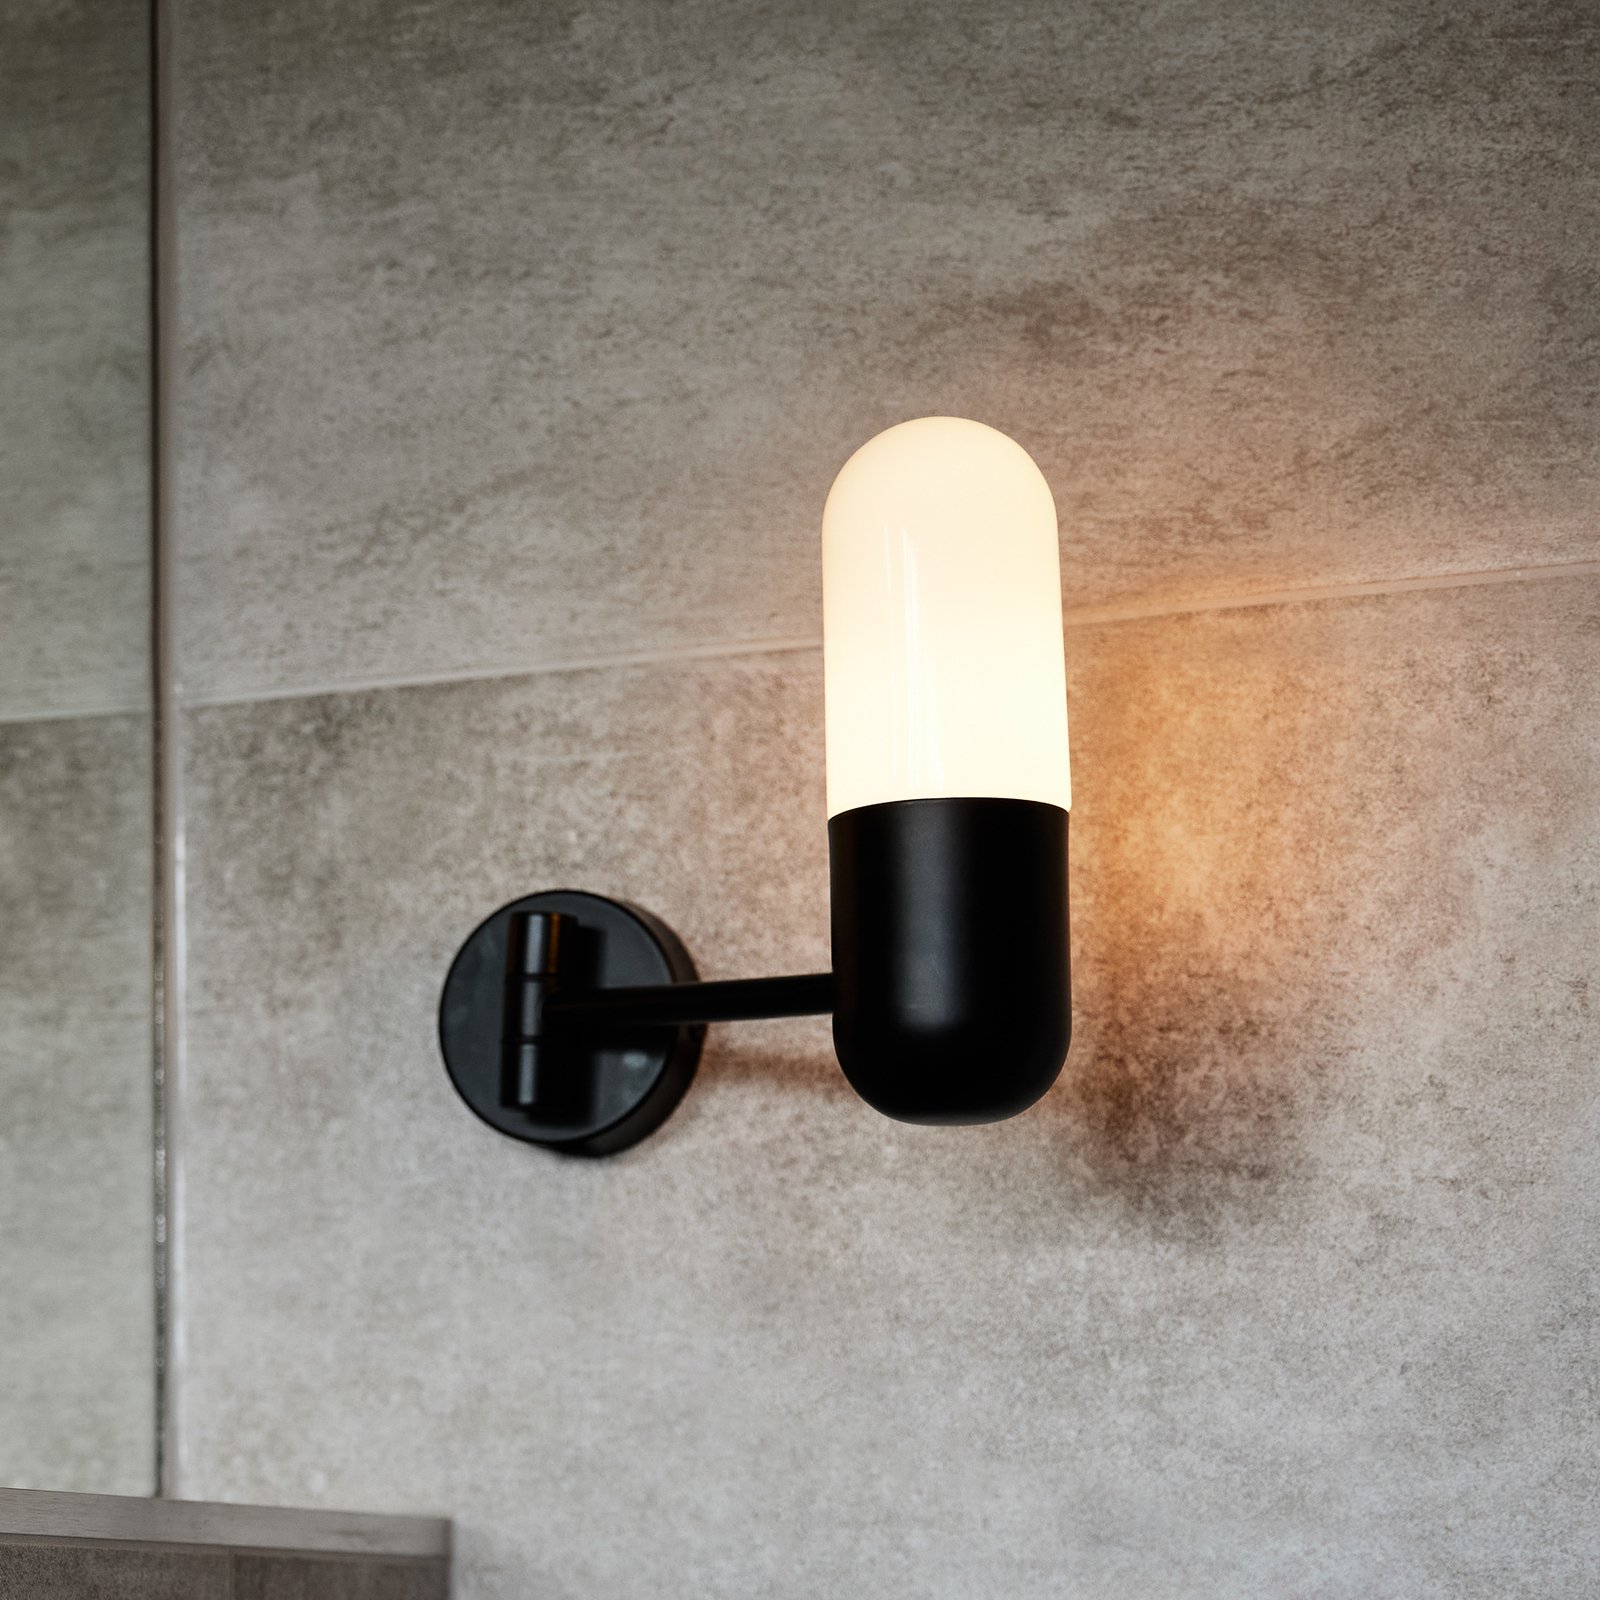 PR Home bathroom wall light Zeta, black, IP44, swivelling